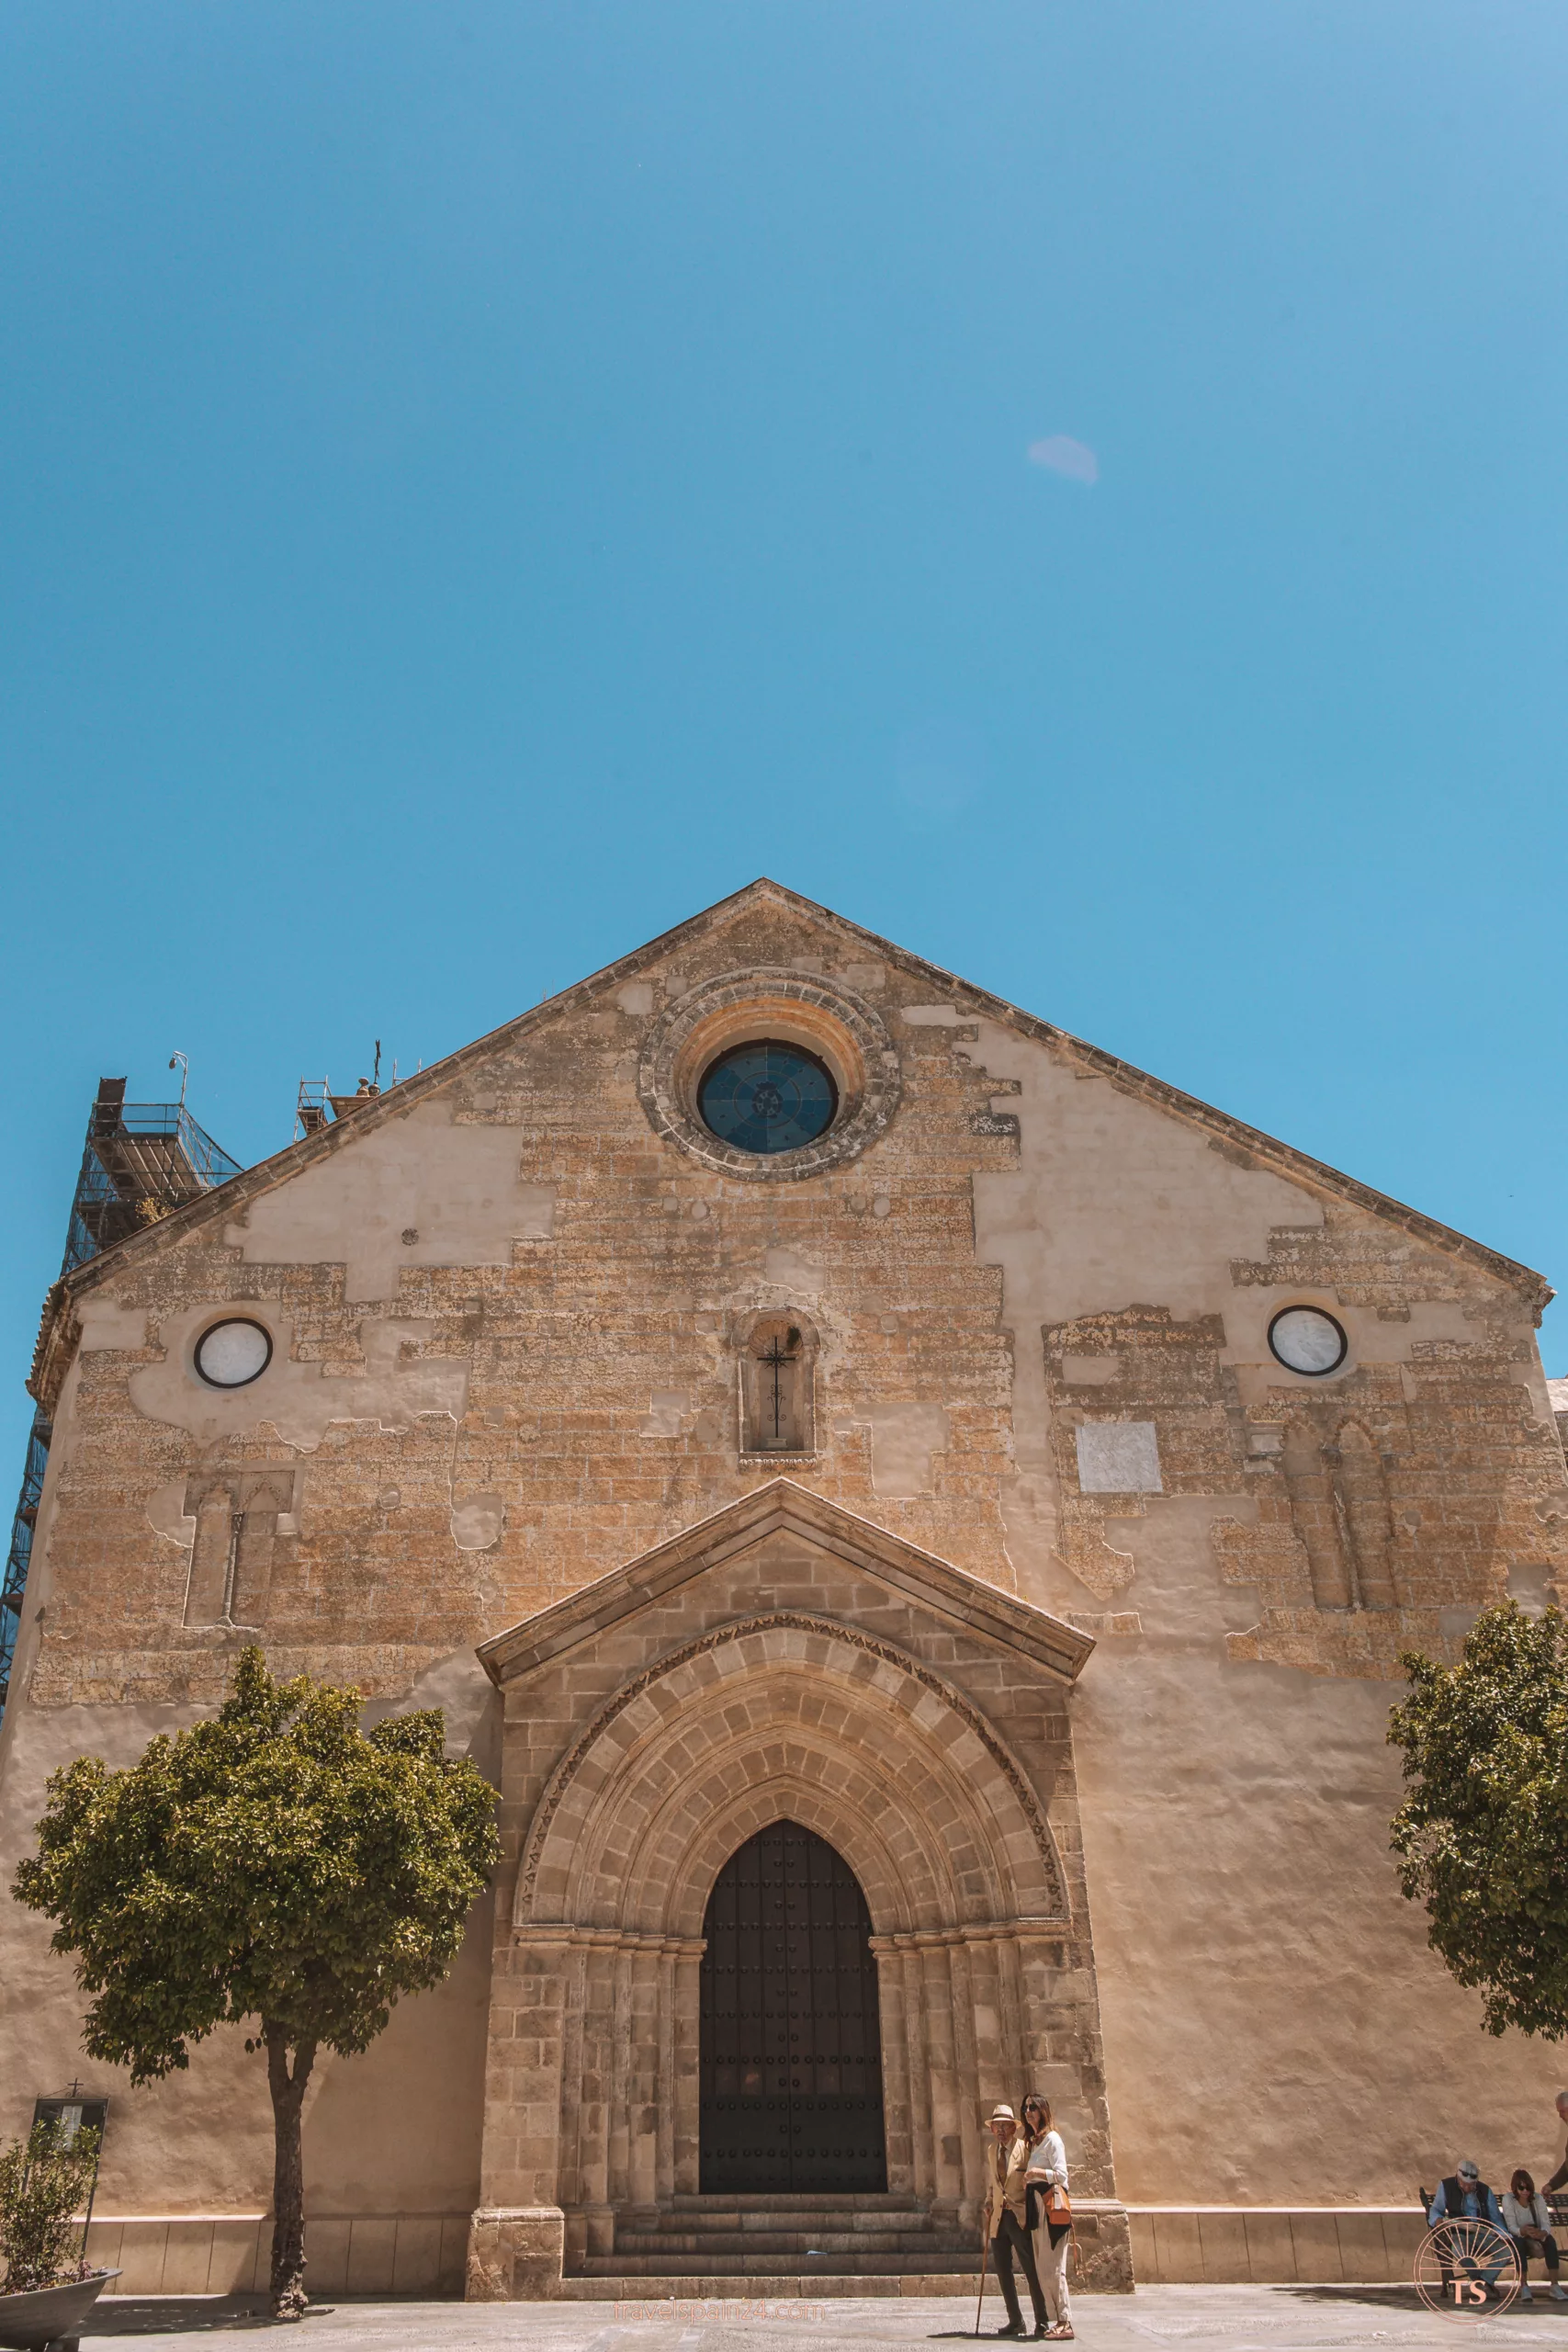 Facade of Real Iglesia De San Dionisio Areopagita in Jerez de la Frontera. This image showcases one of the significant religious sites in the city.